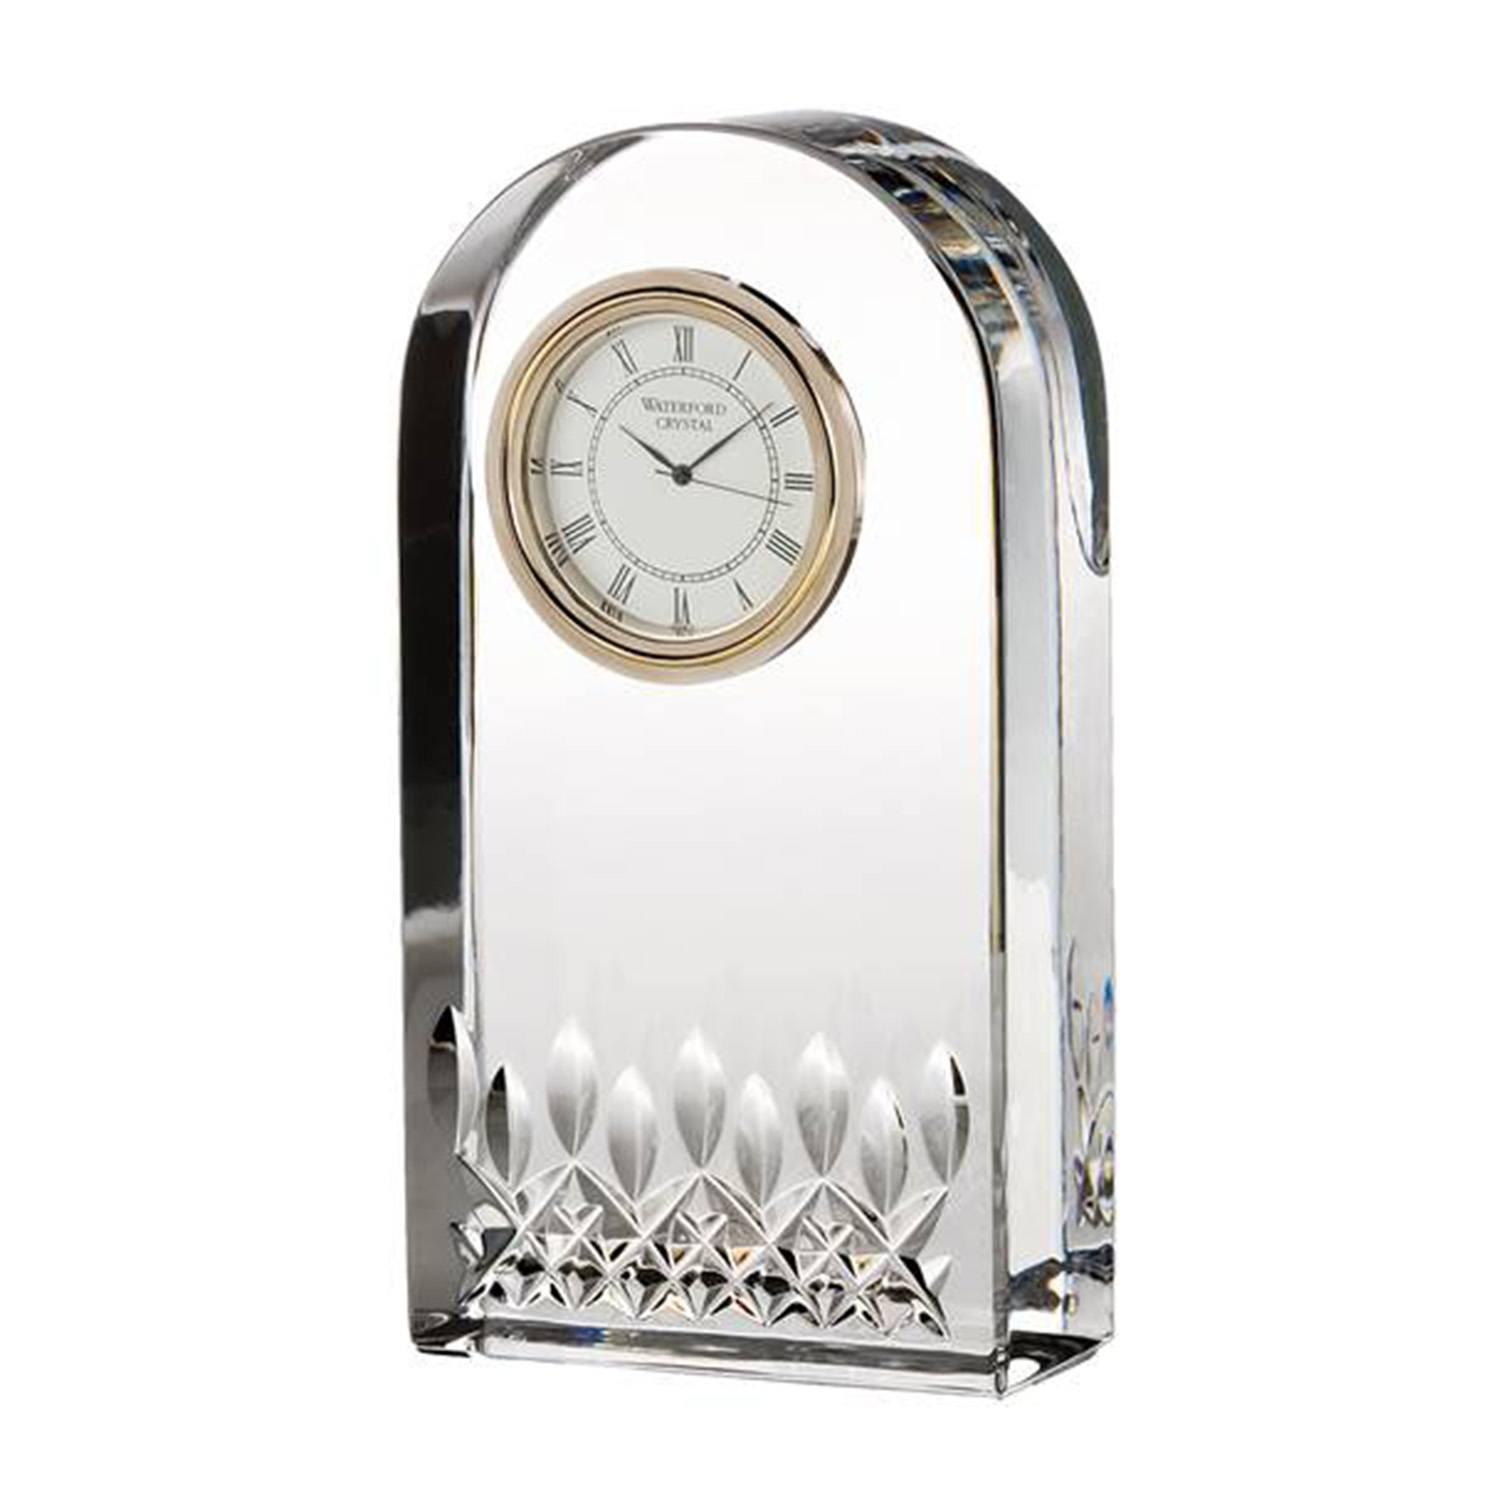 Waterford Lismore Essence Clock